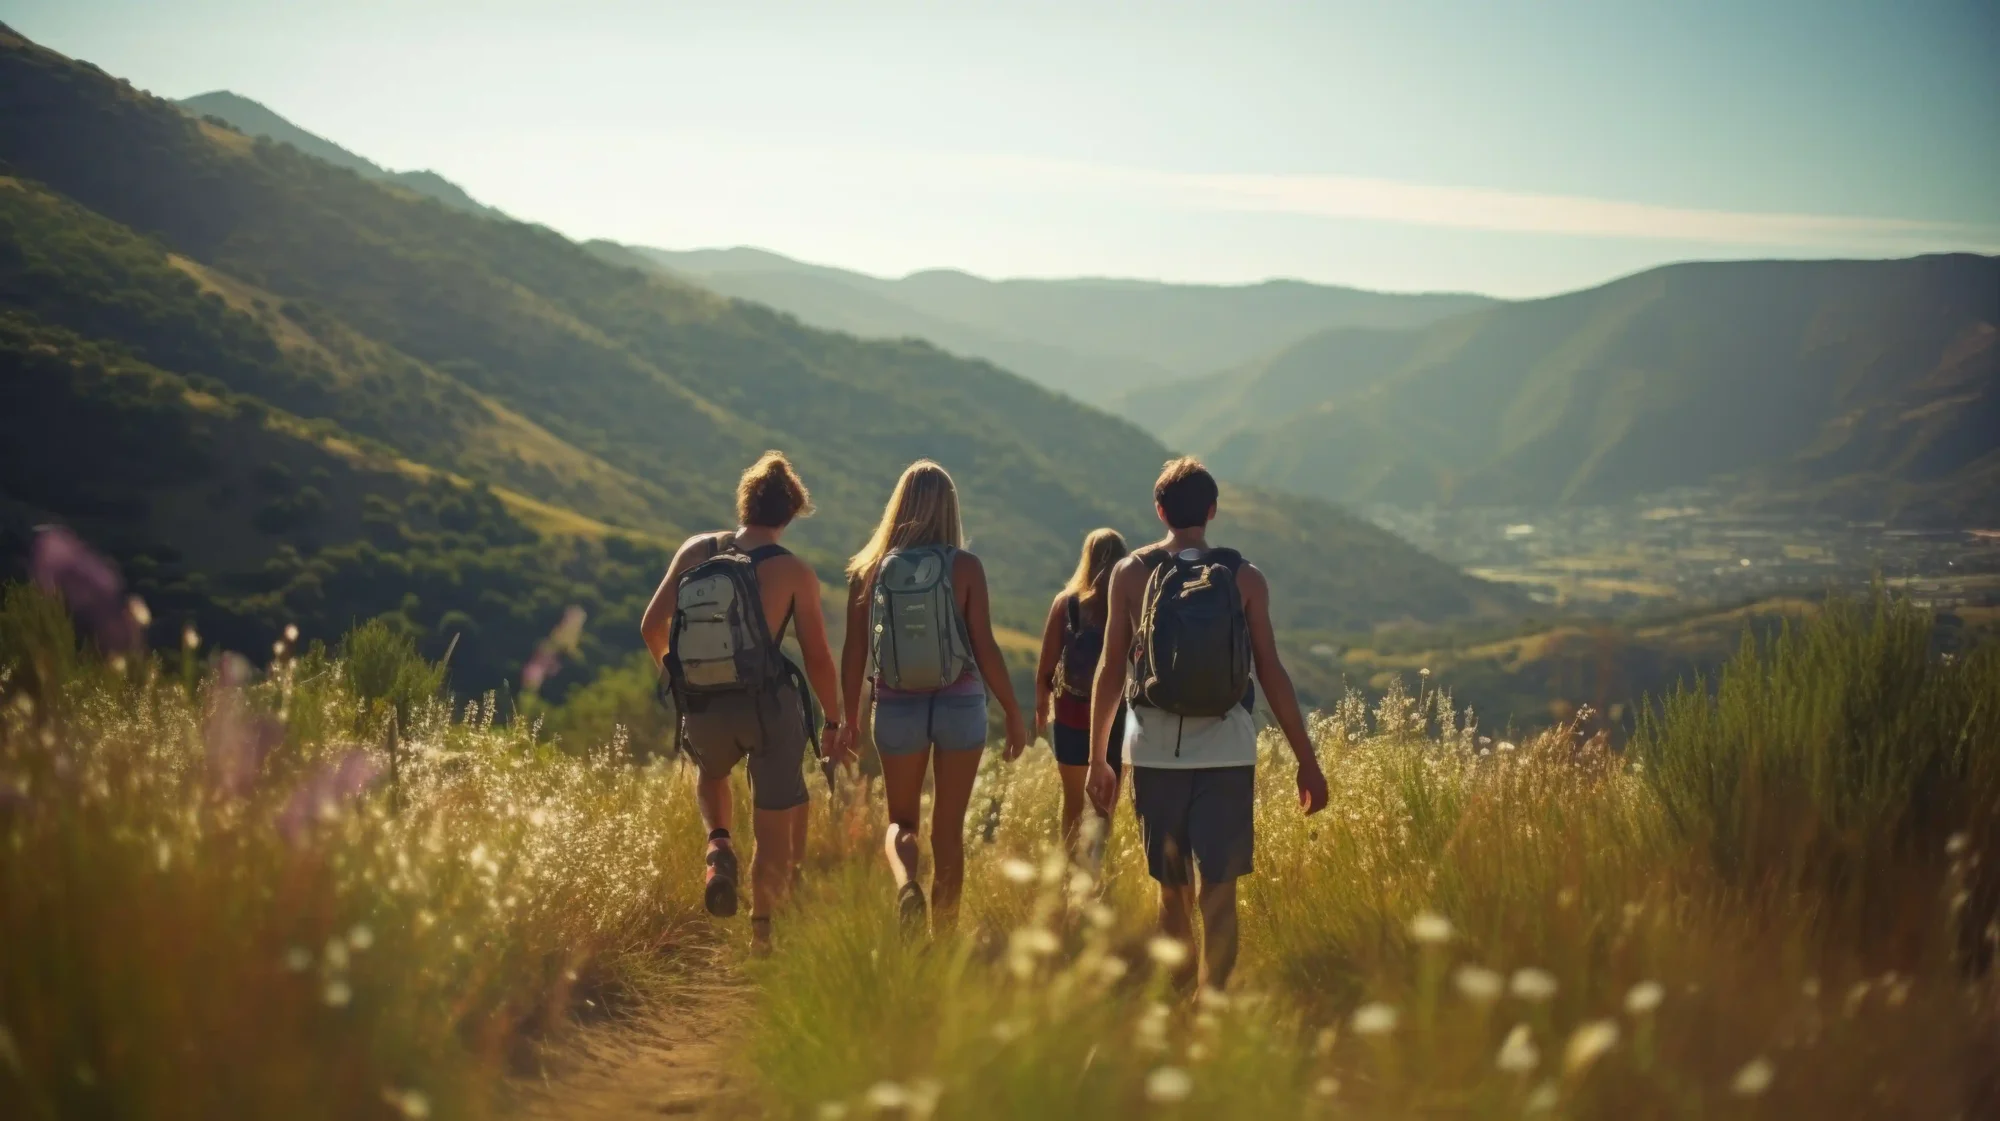 A group of friends hiking through a mountain trail